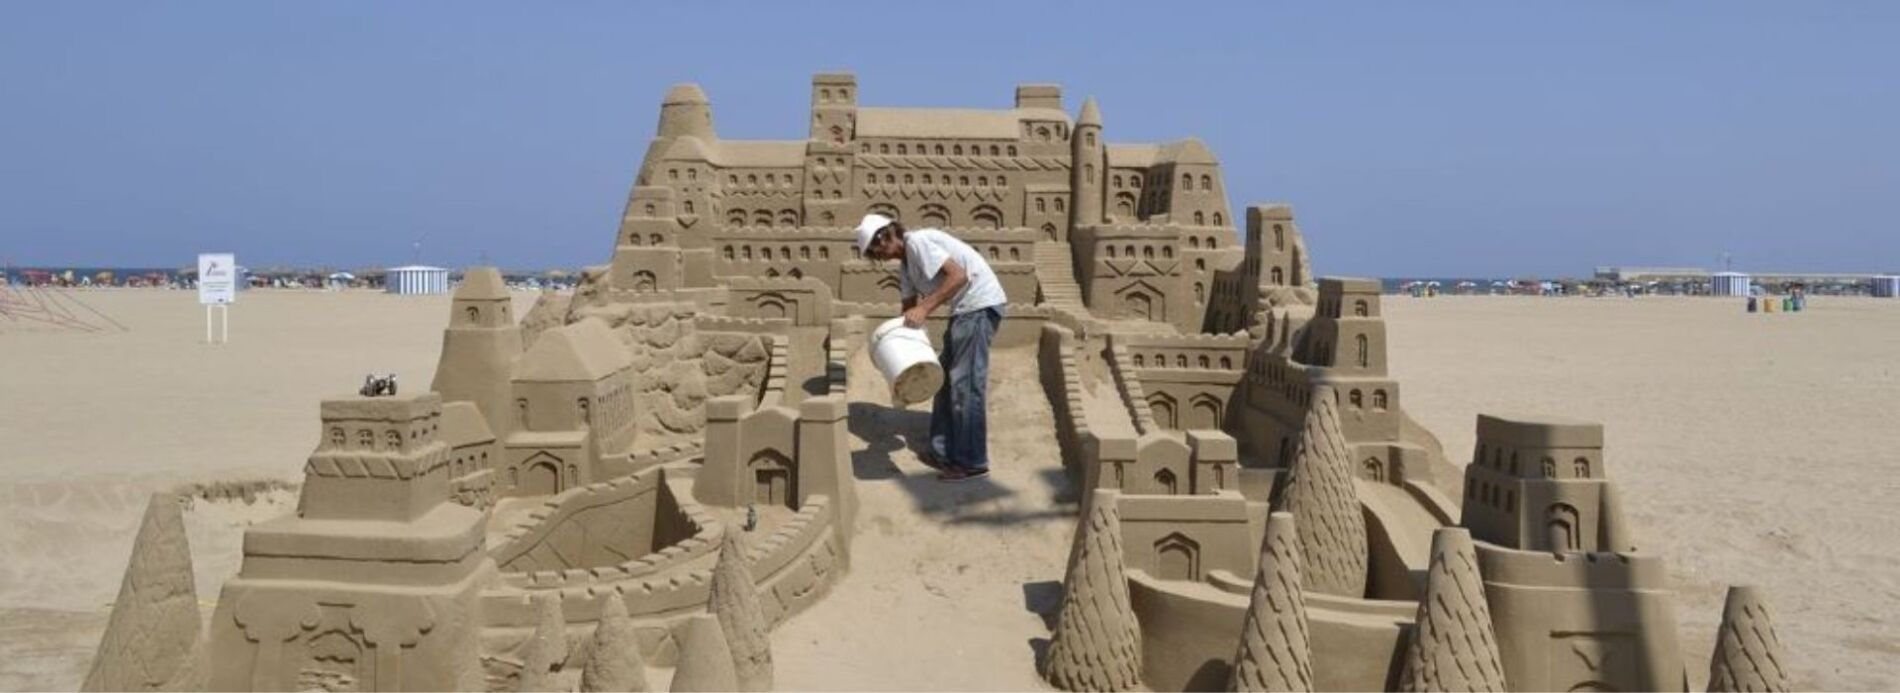 Man building large sandcastle